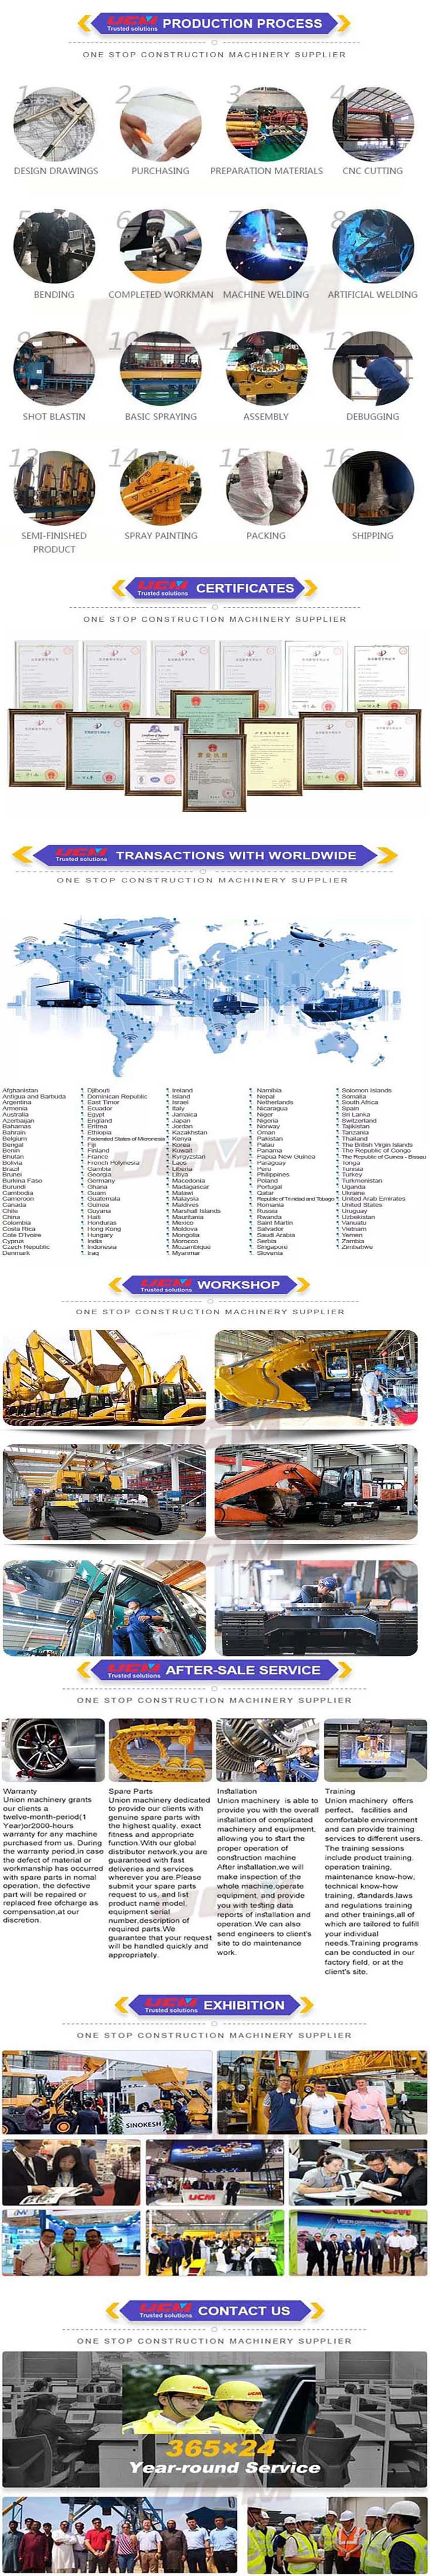 Used Japan Construction Machine PC200-7 Crawler Excavator Heavy Duty Equipment